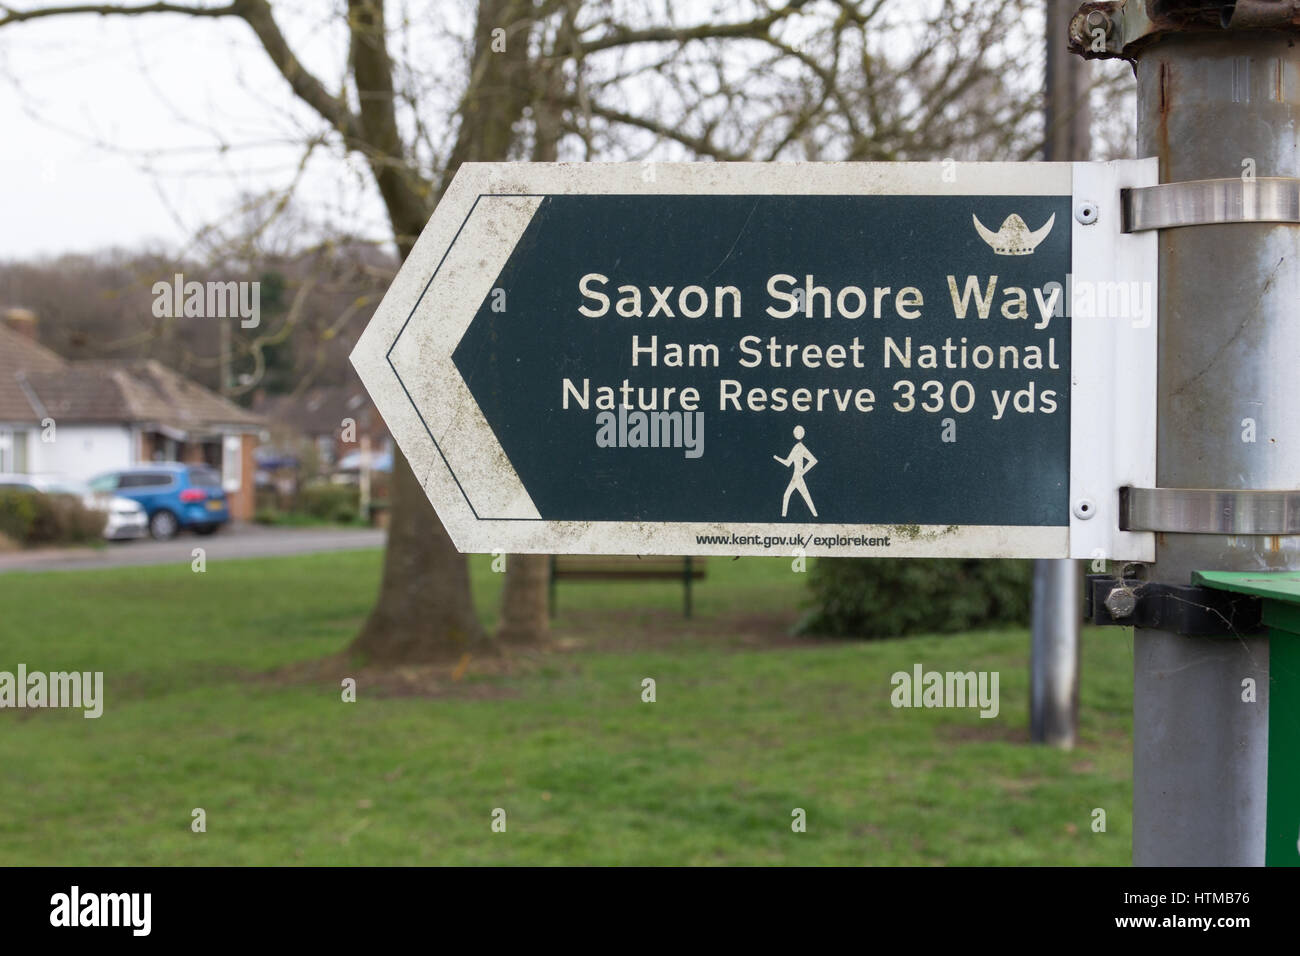 Saxon Shore way and ham street national nature reserve fingerpost signpost, hamstreet, kent, uk Stock Photo